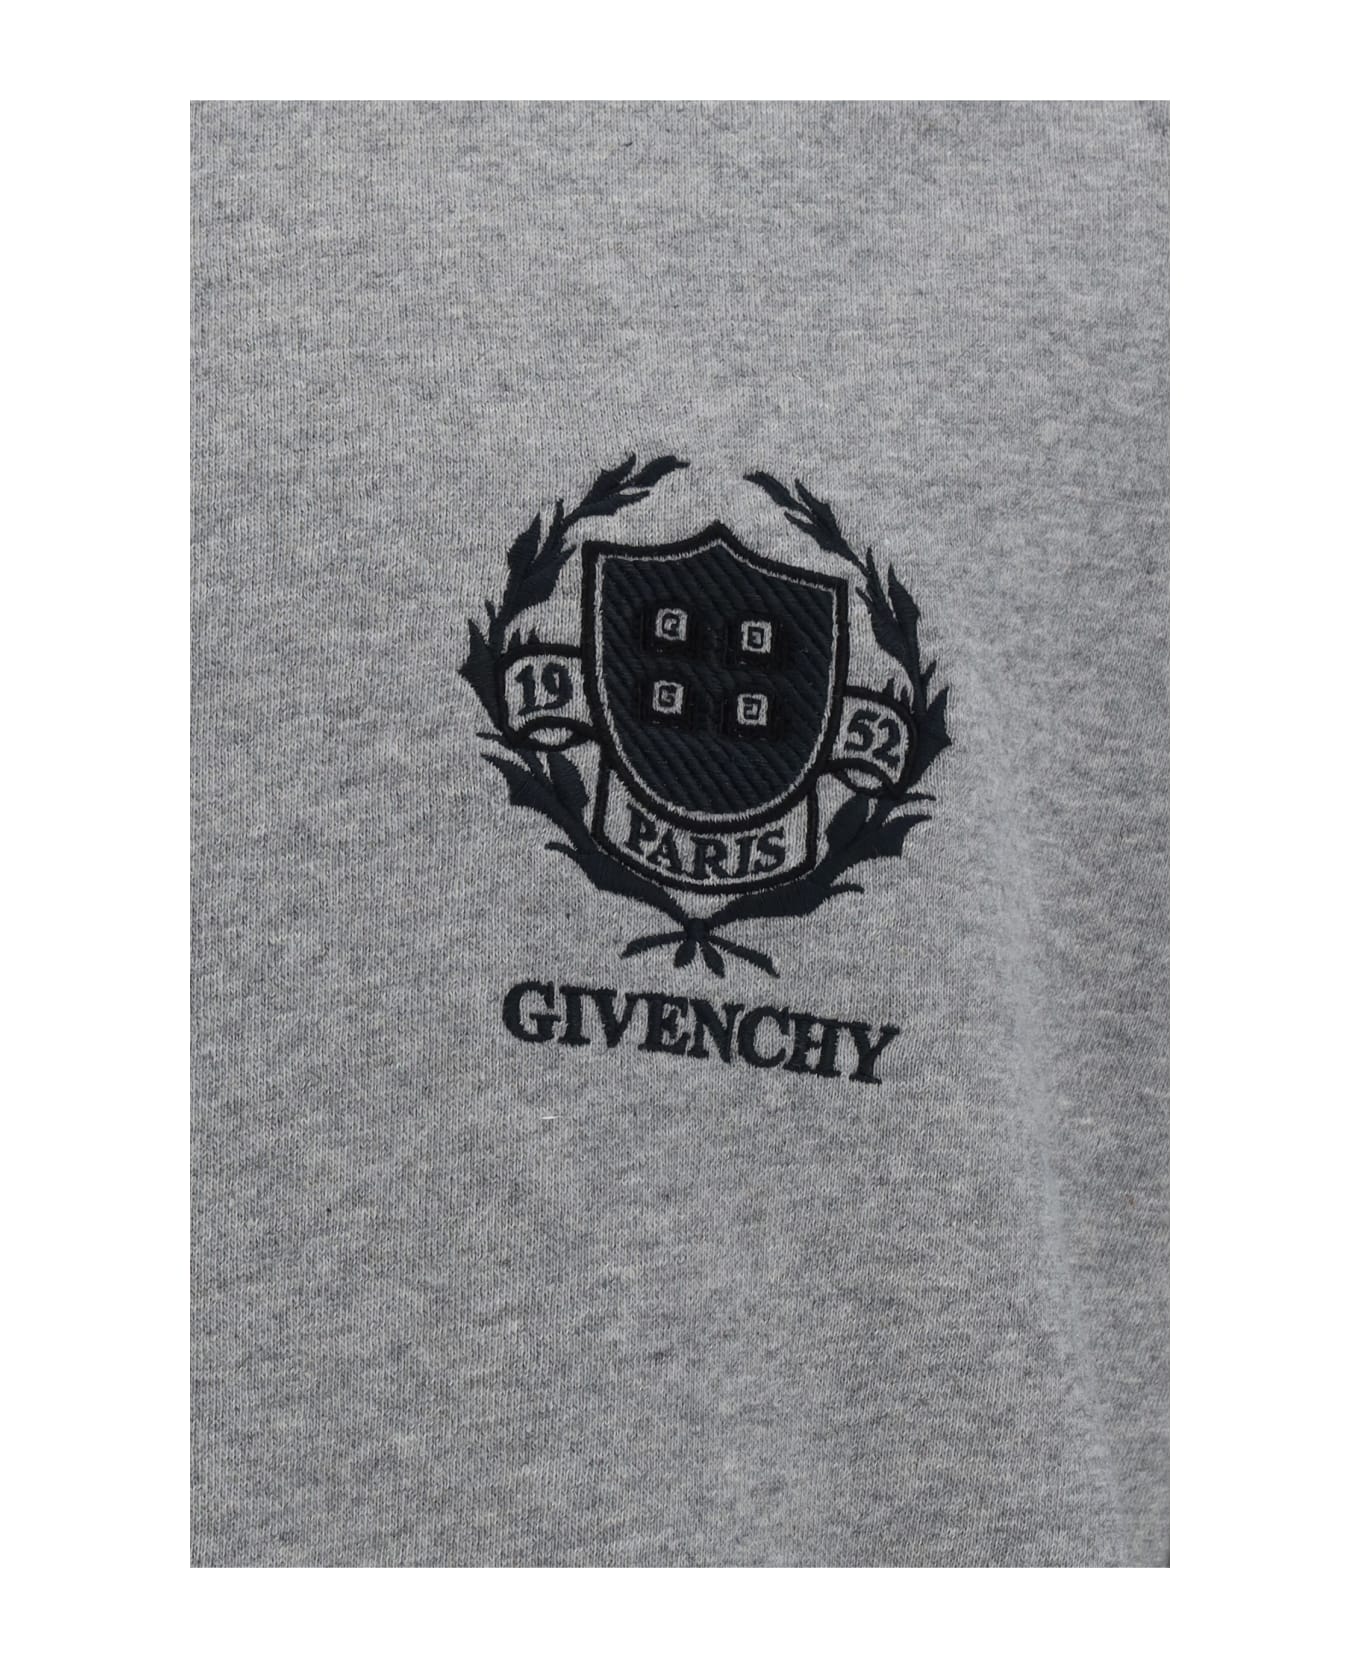 Givenchy Slim Sweatshirt - Light Grey Melang